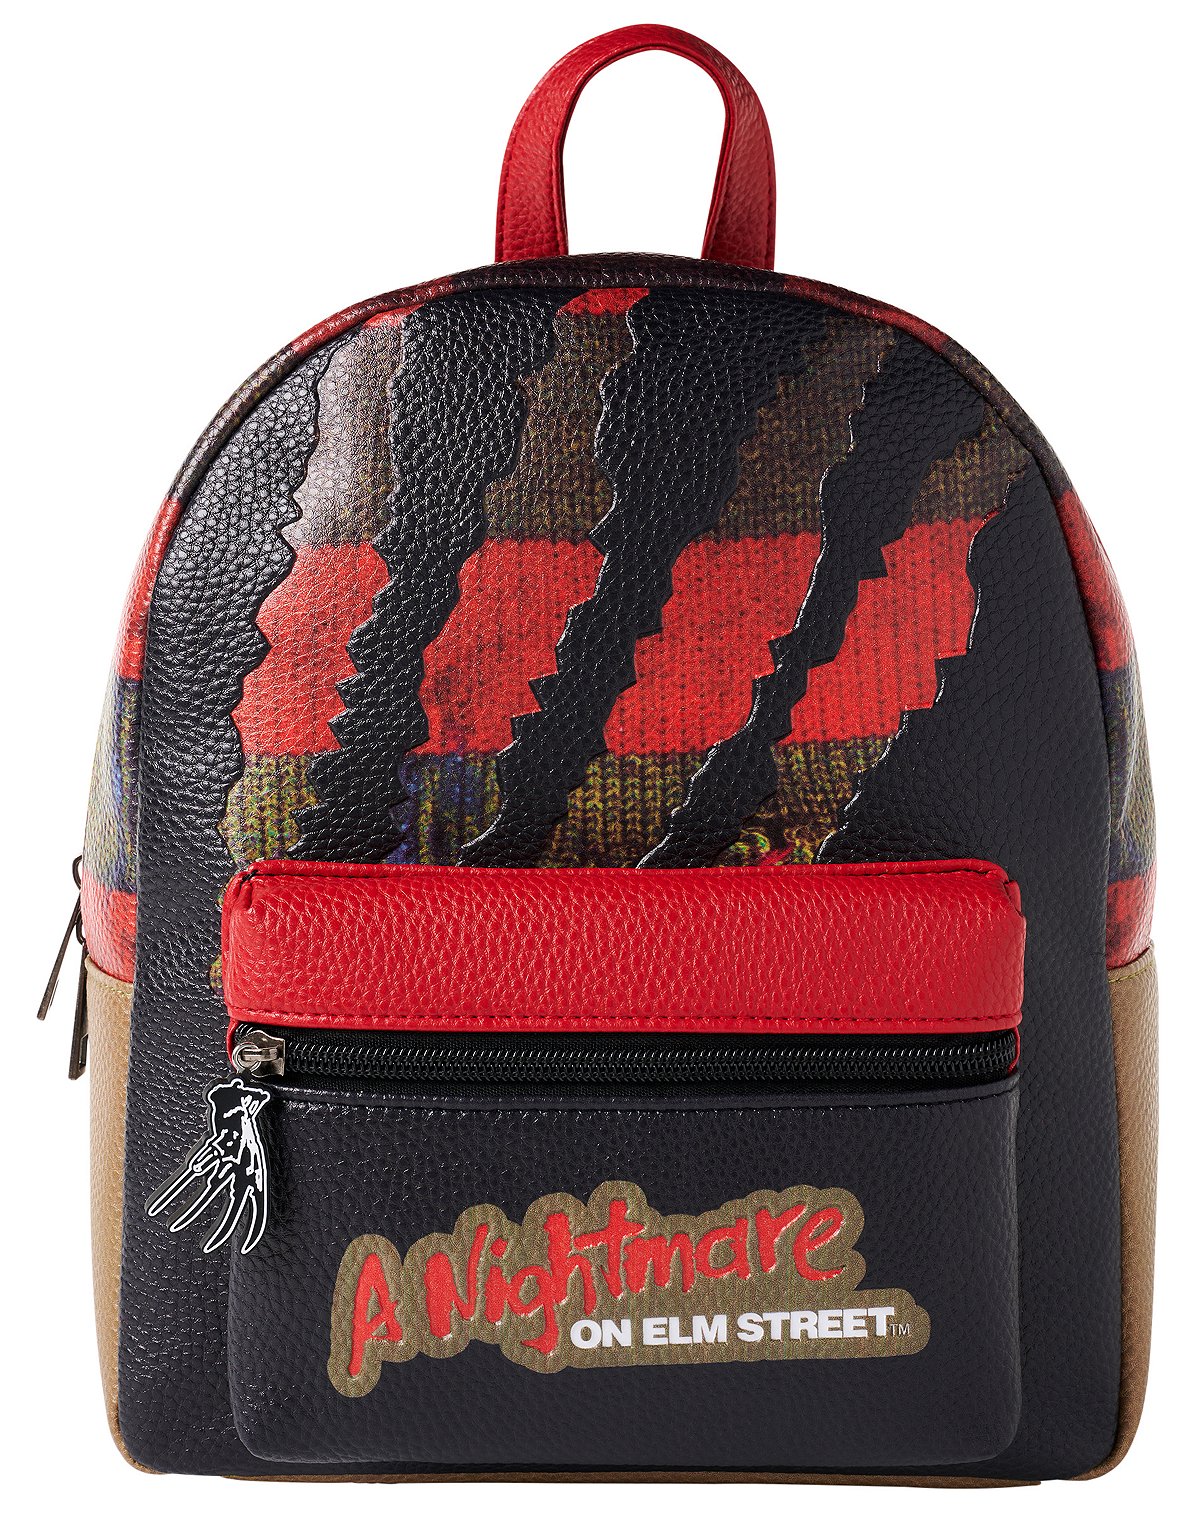 Freddy Krueger Mini Backpack- A Nightmare on Elm Street